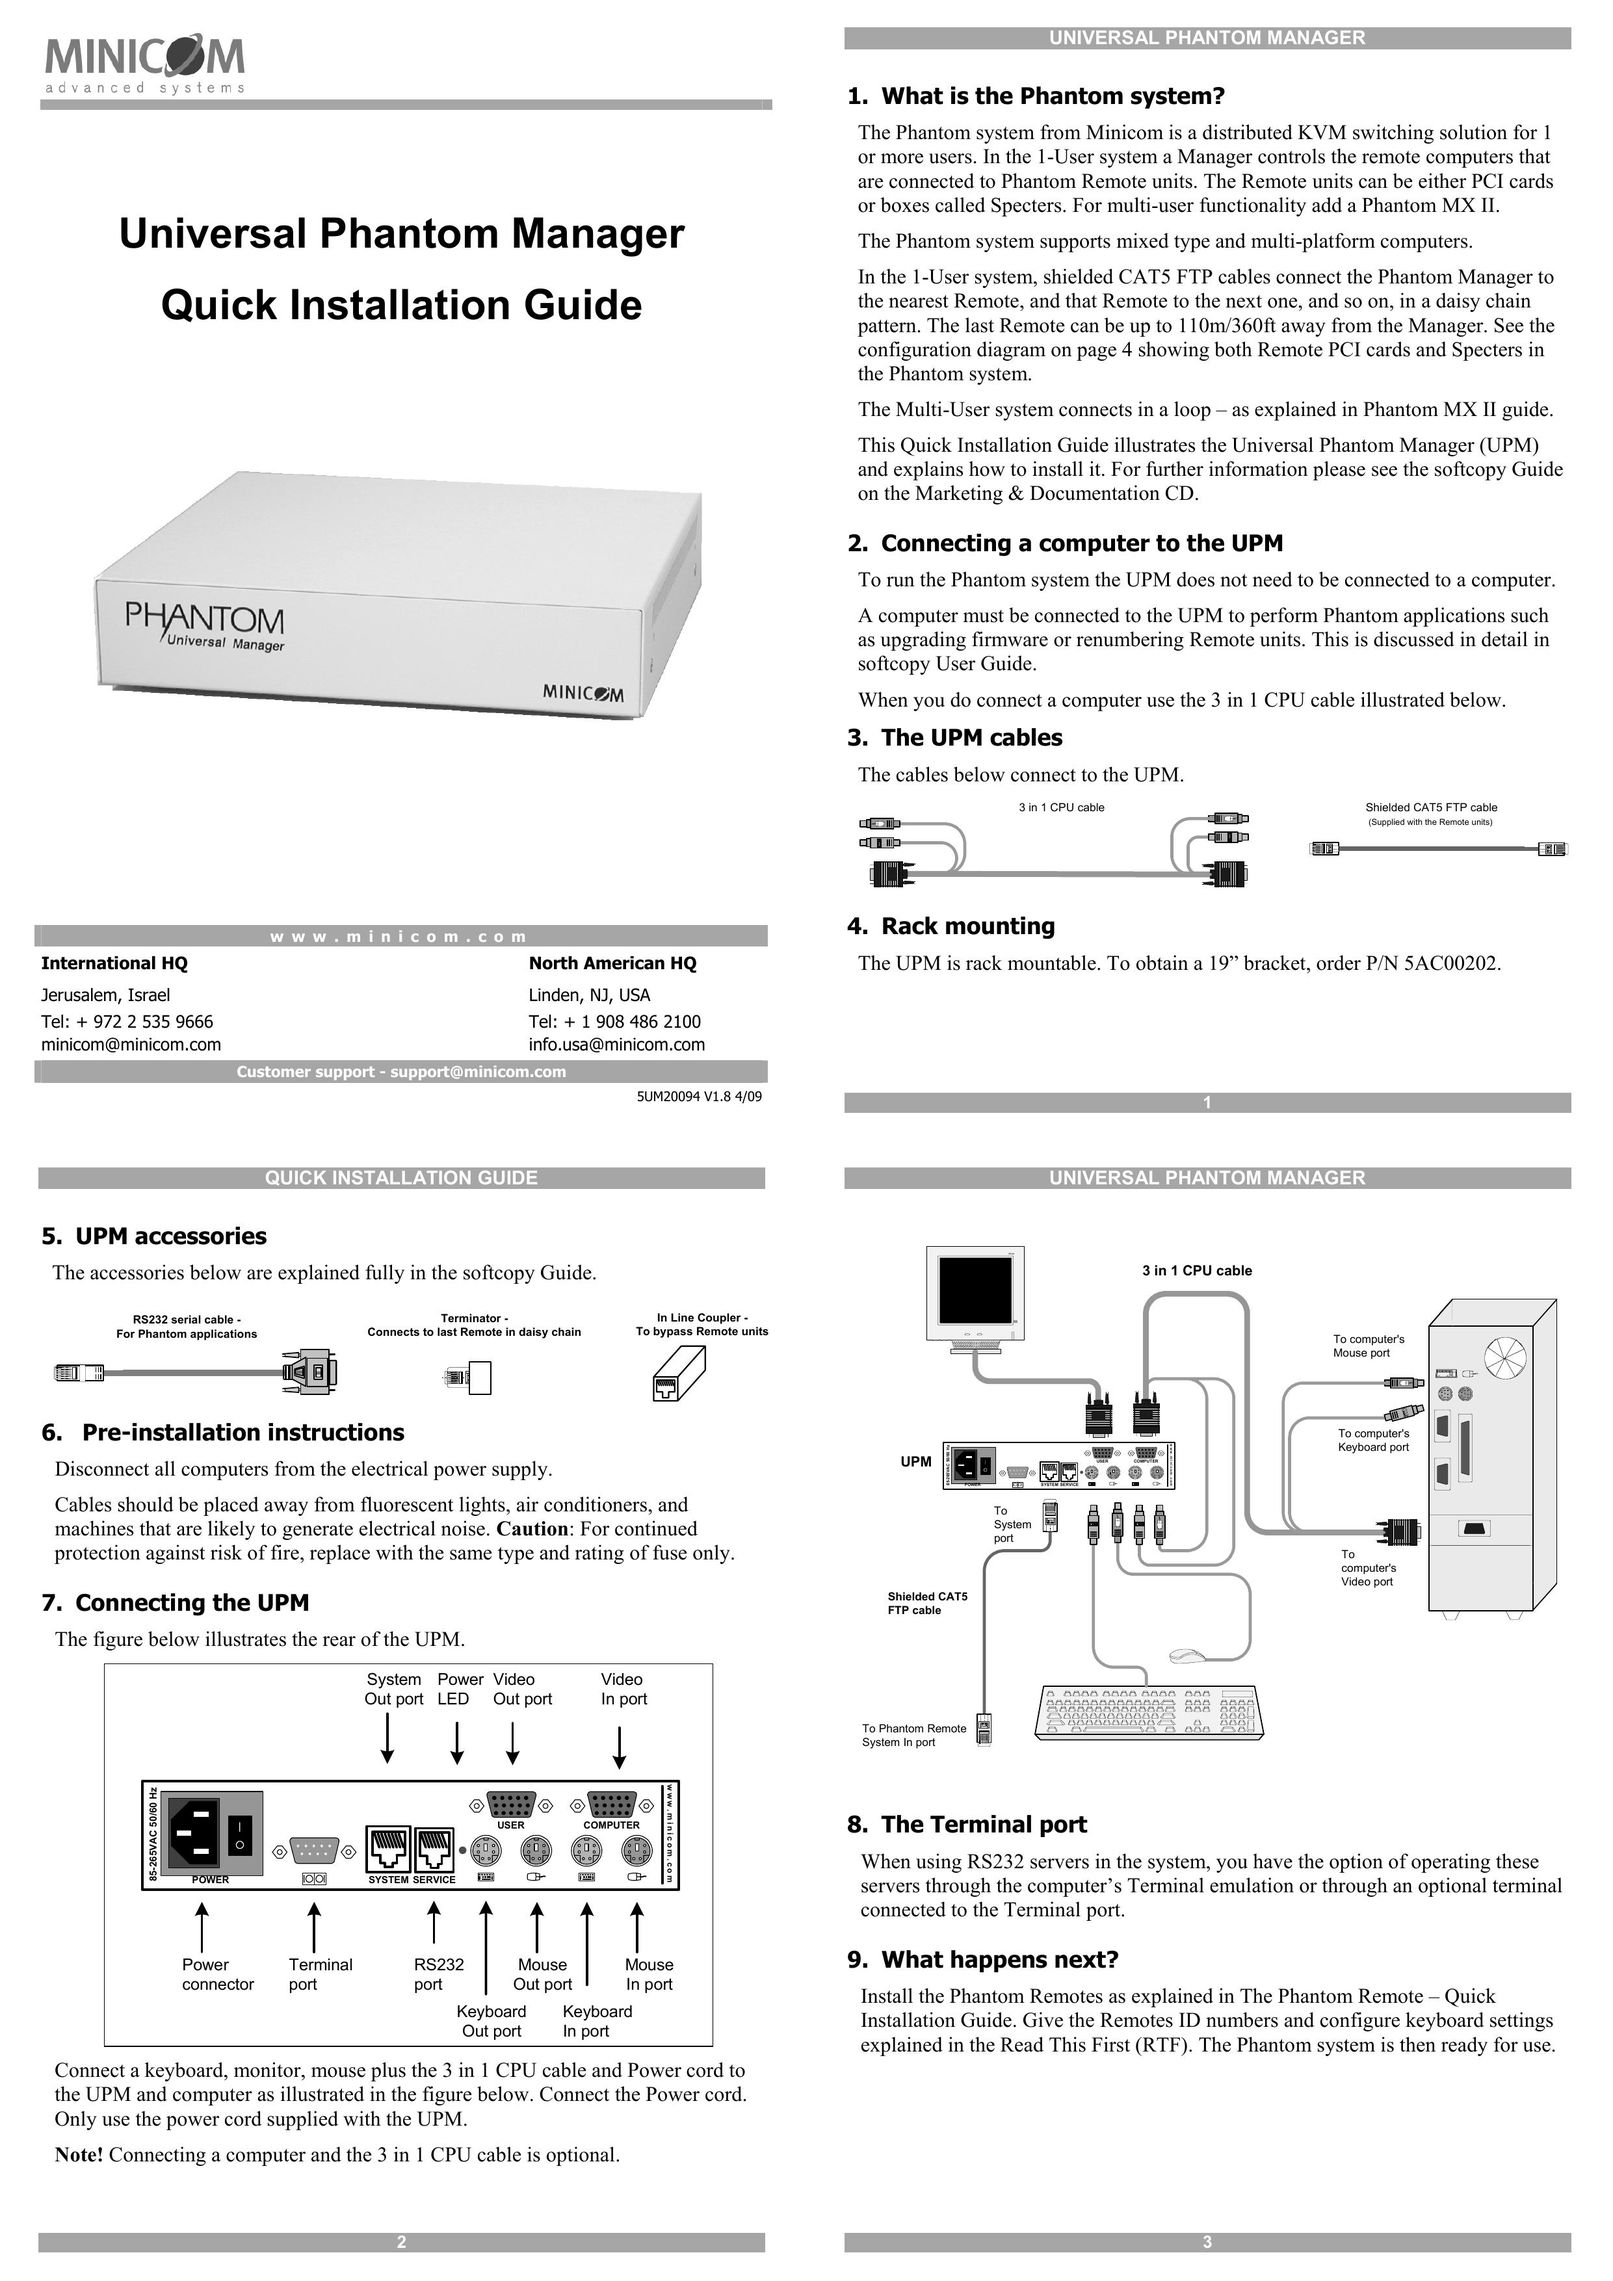 Minicom Advanced Systems 5UM20094 Switch User Manual